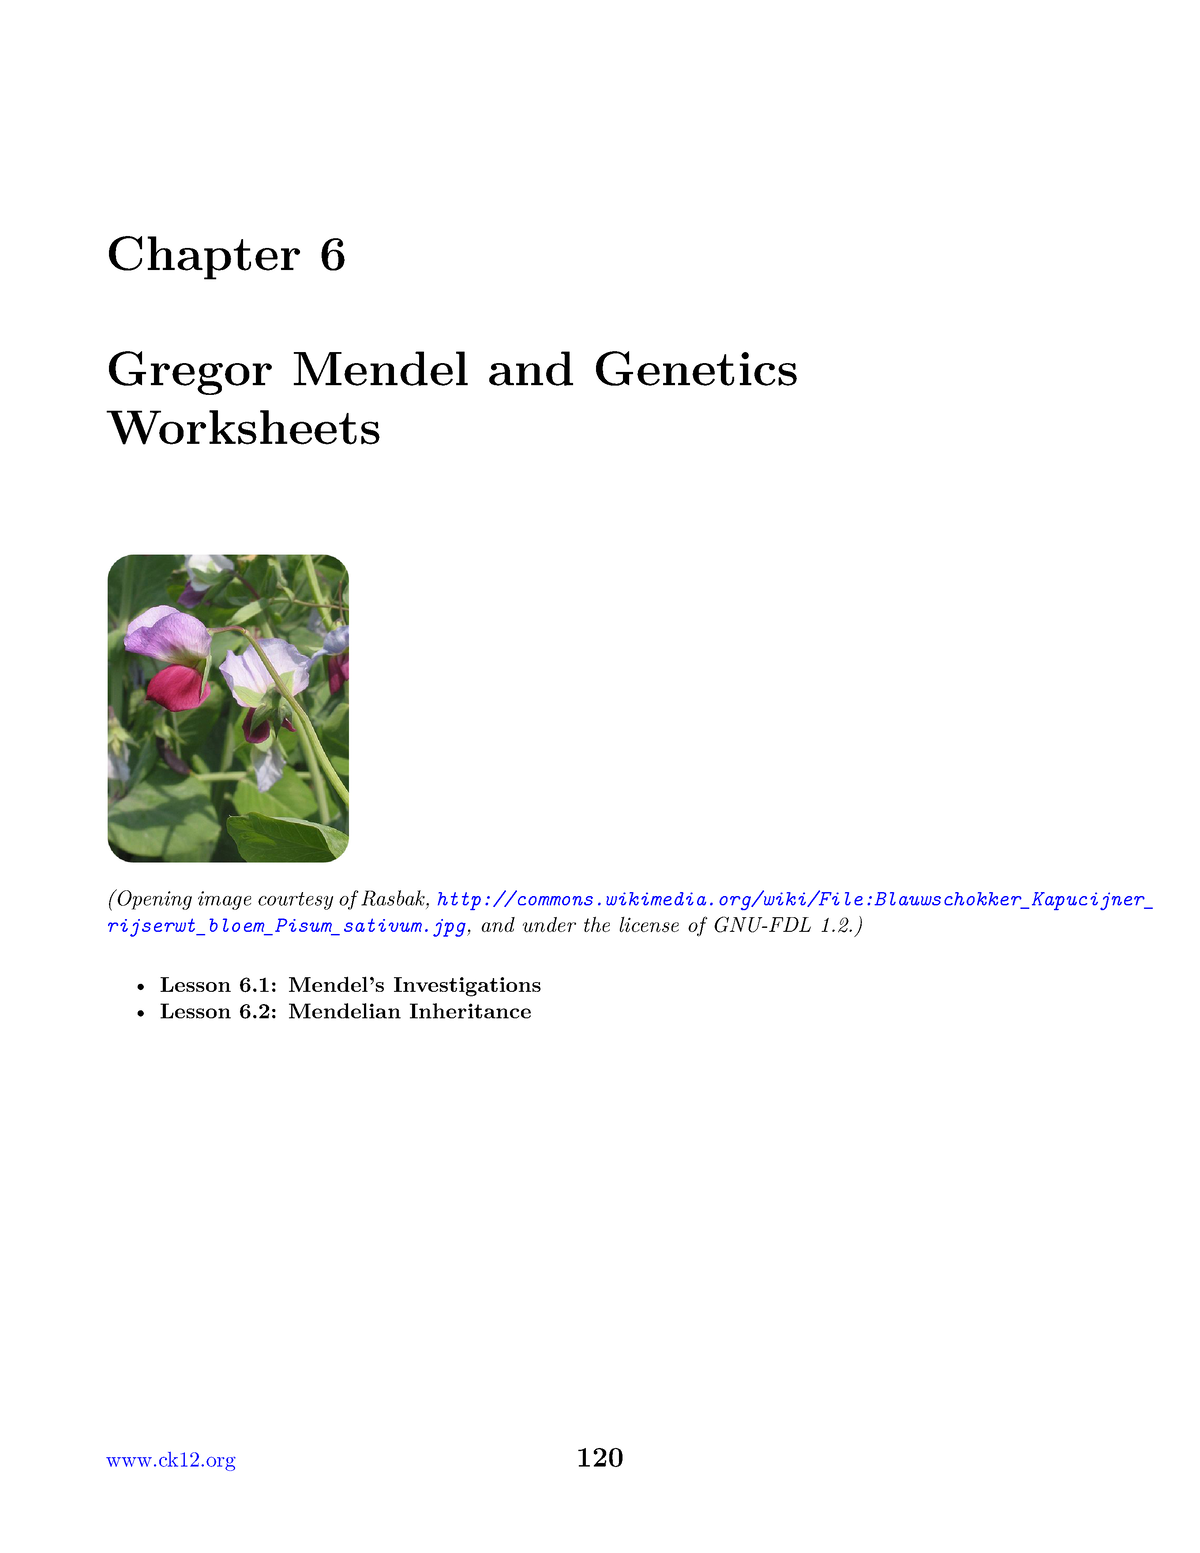 mendel-questions-chapter-6-gregor-mendel-and-genetics-worksheets-opening-image-courtesy-of